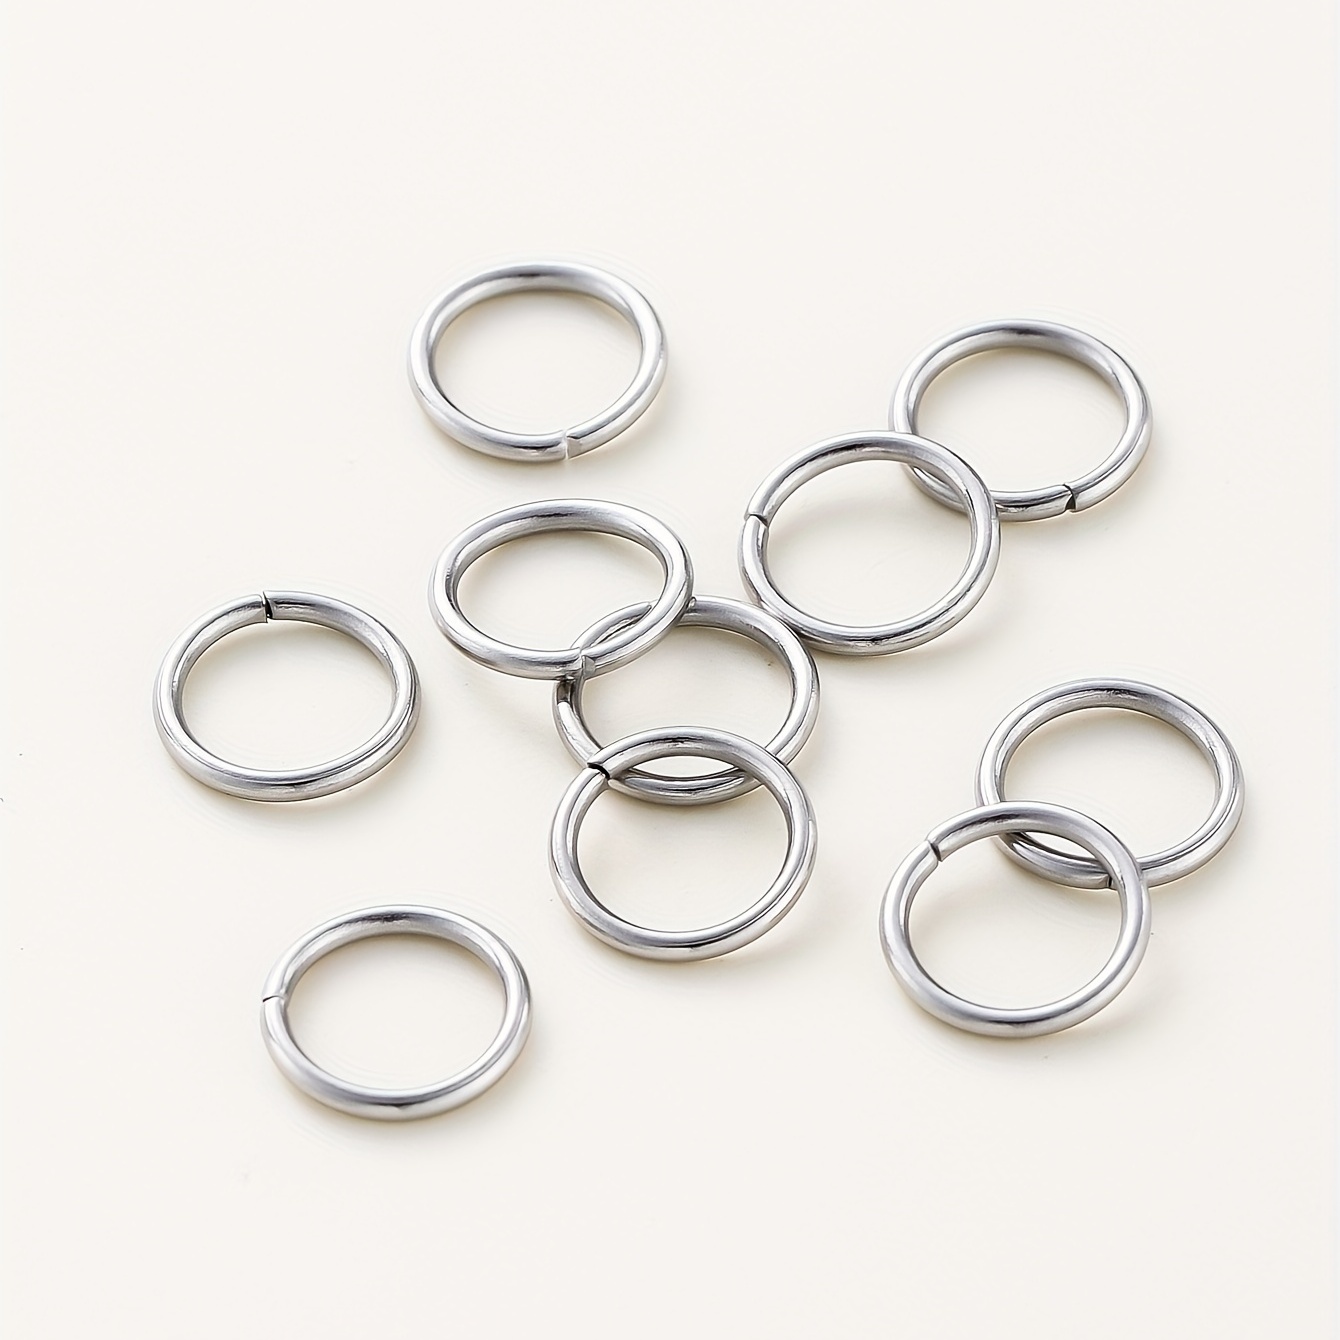 Single Loops Open Jump Rings Jewelry Making Metals Split Ring Diy 3-10mm  200pcs